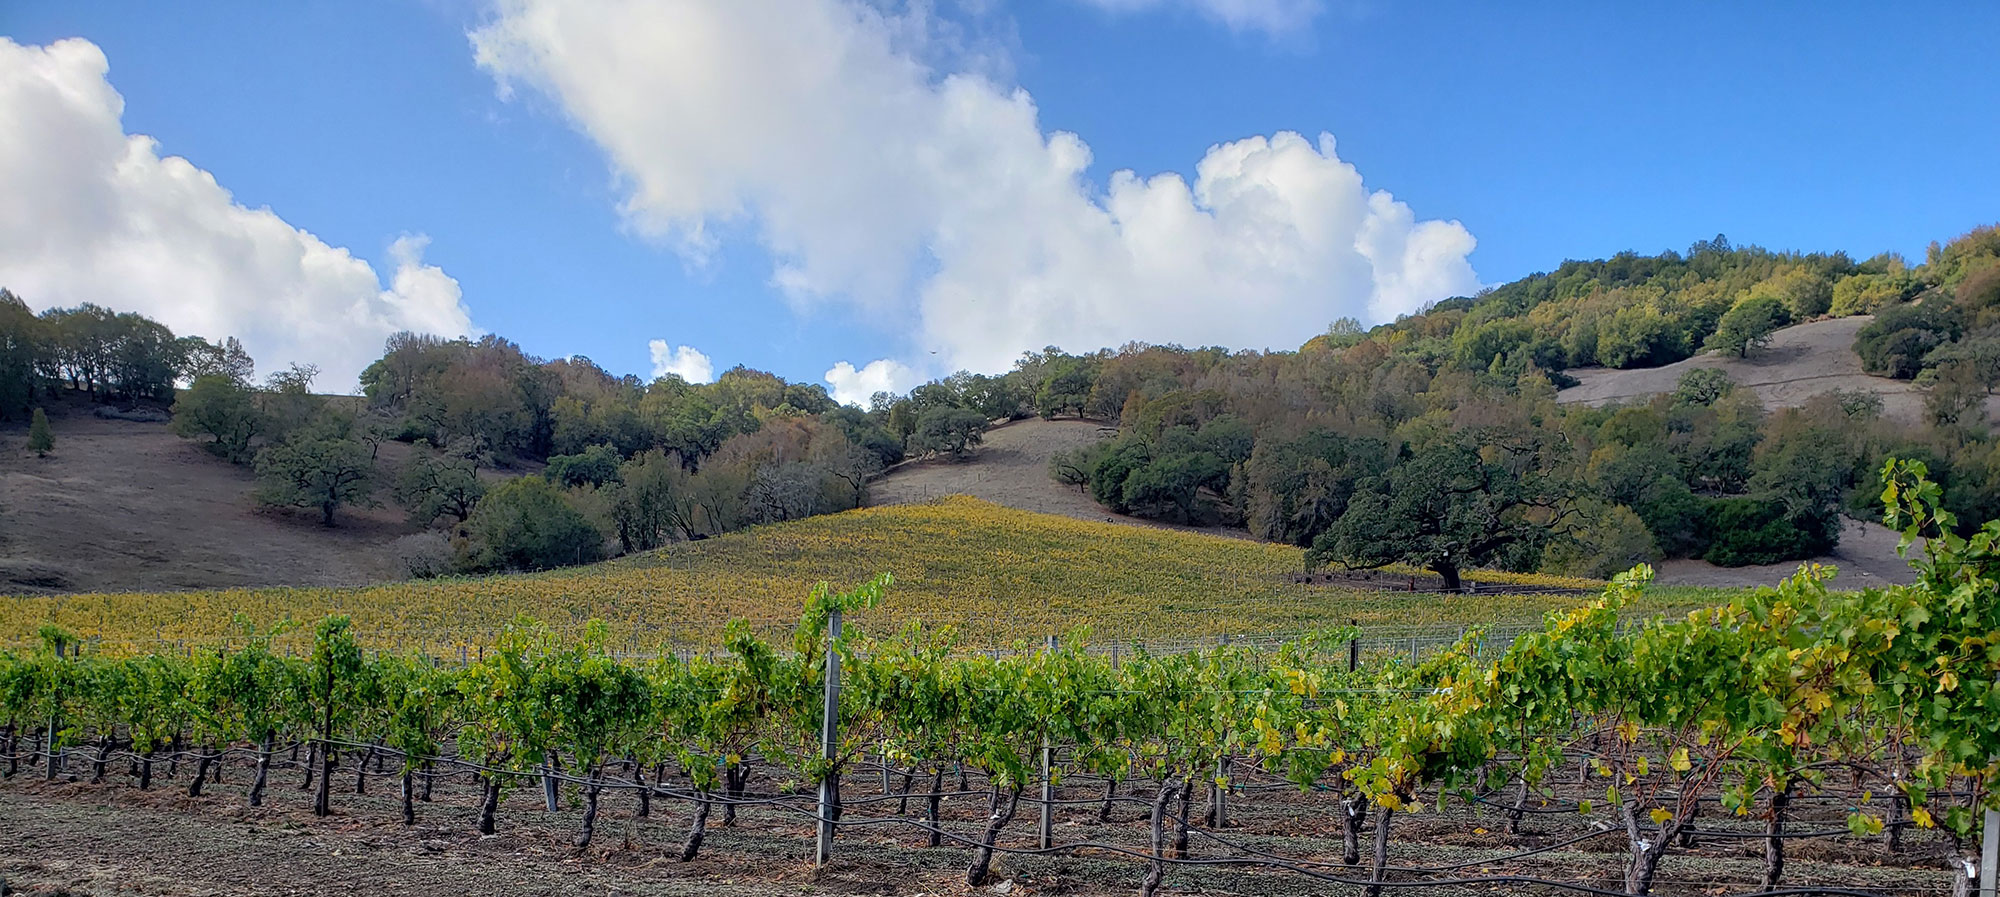 Fall 2021 in the vineyard